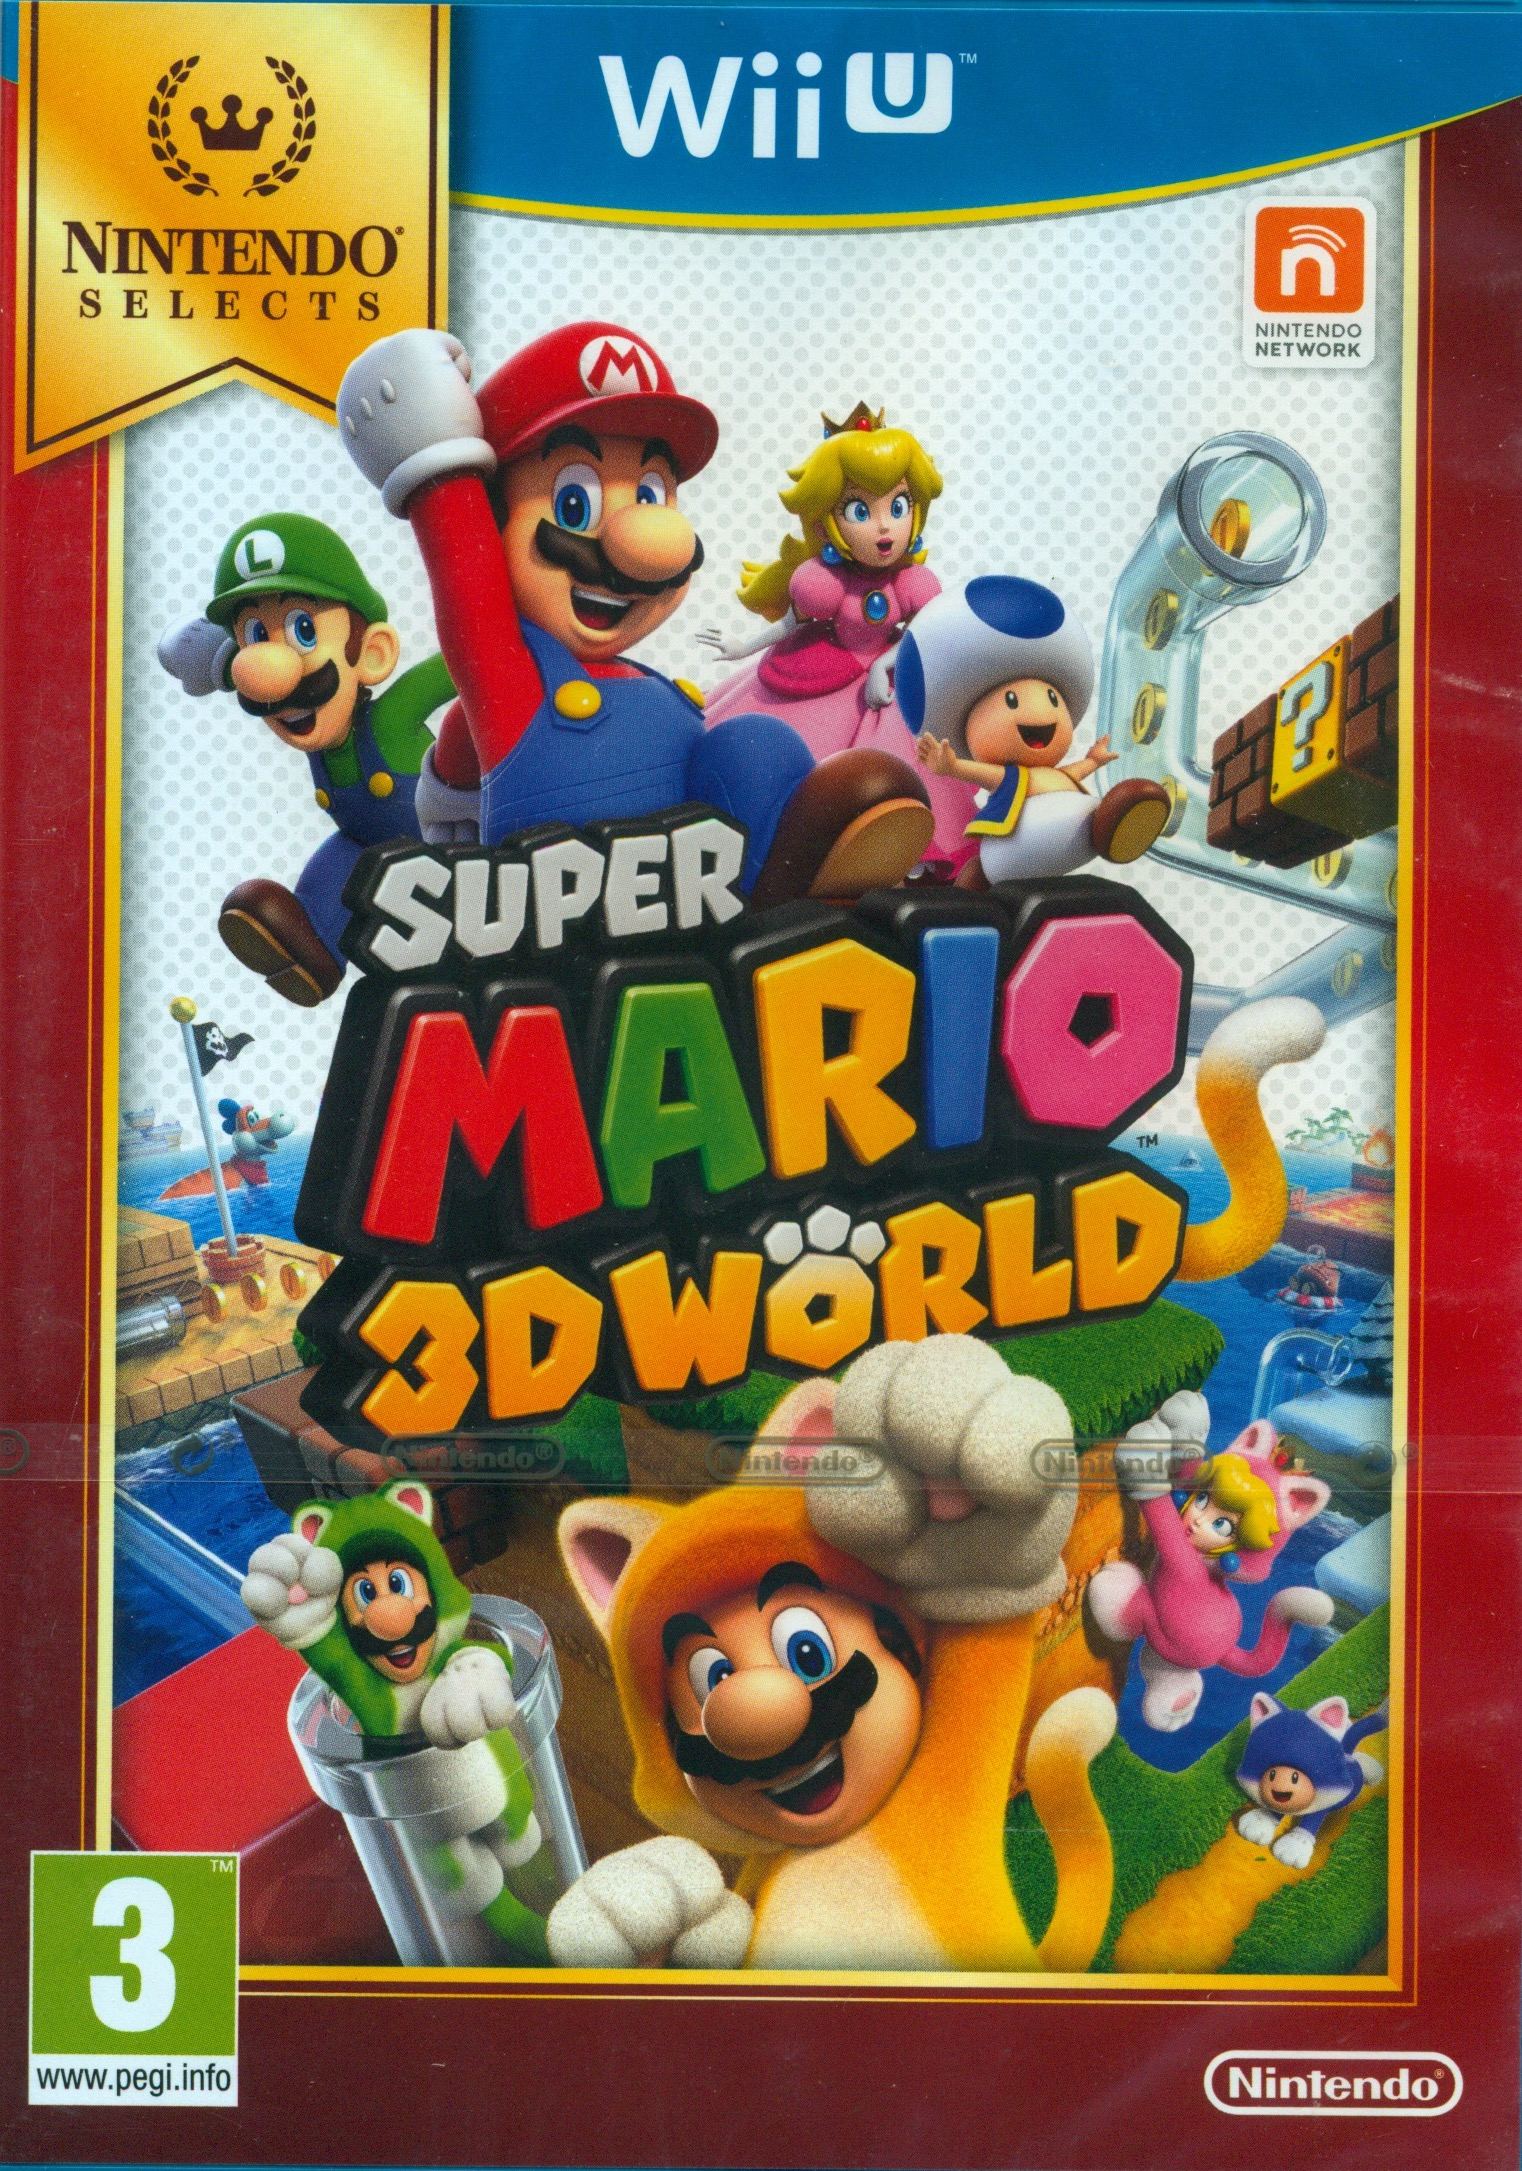 Wii U Nintendo Selects: Super Mario 3D World 